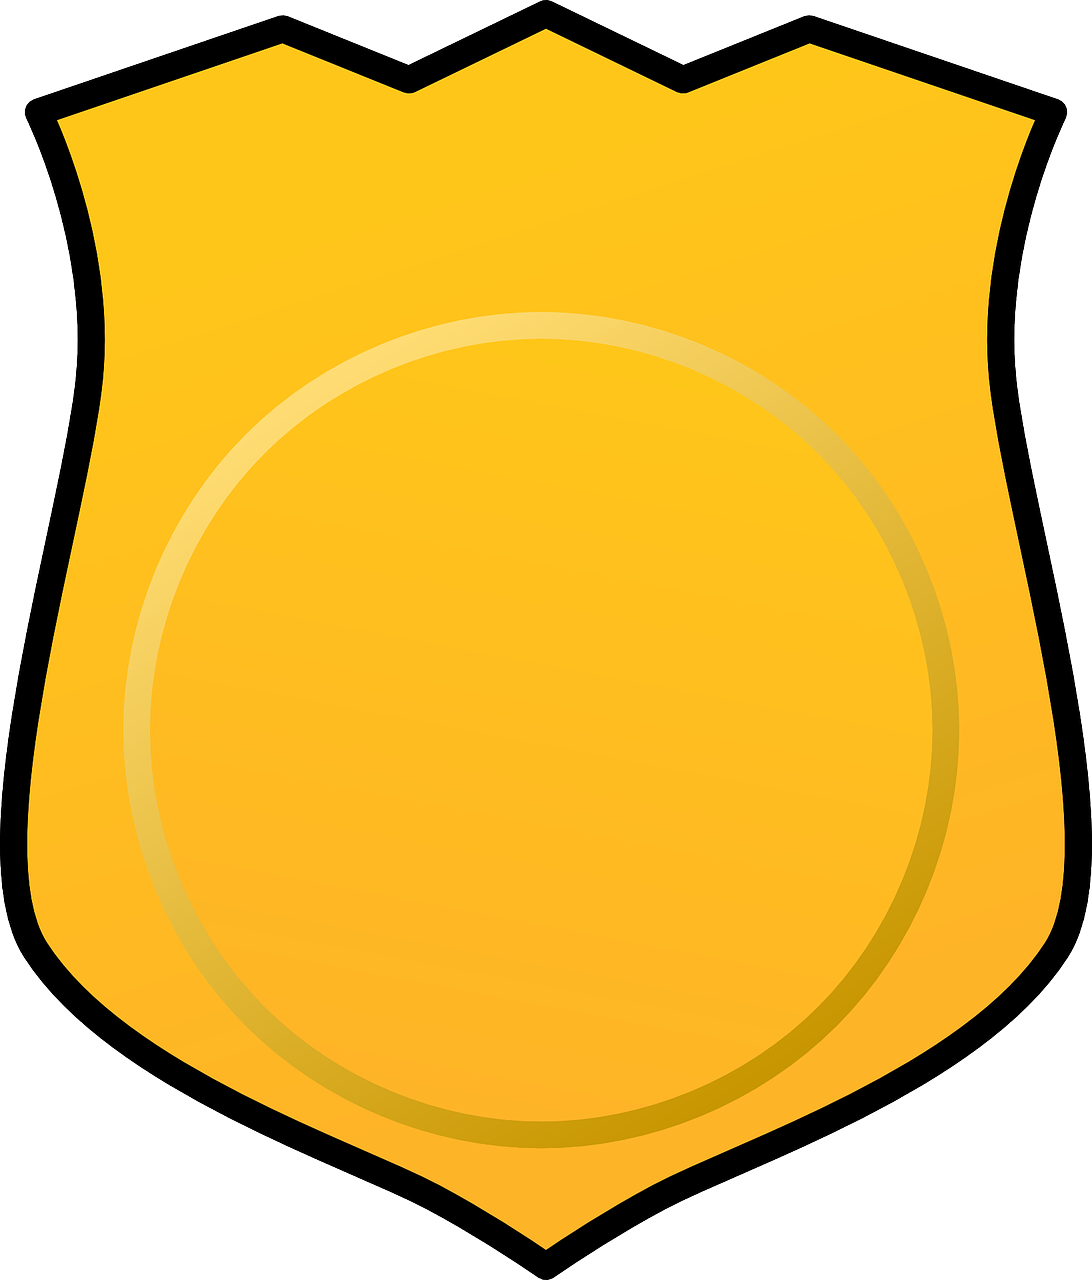 irs criminal investigation badge